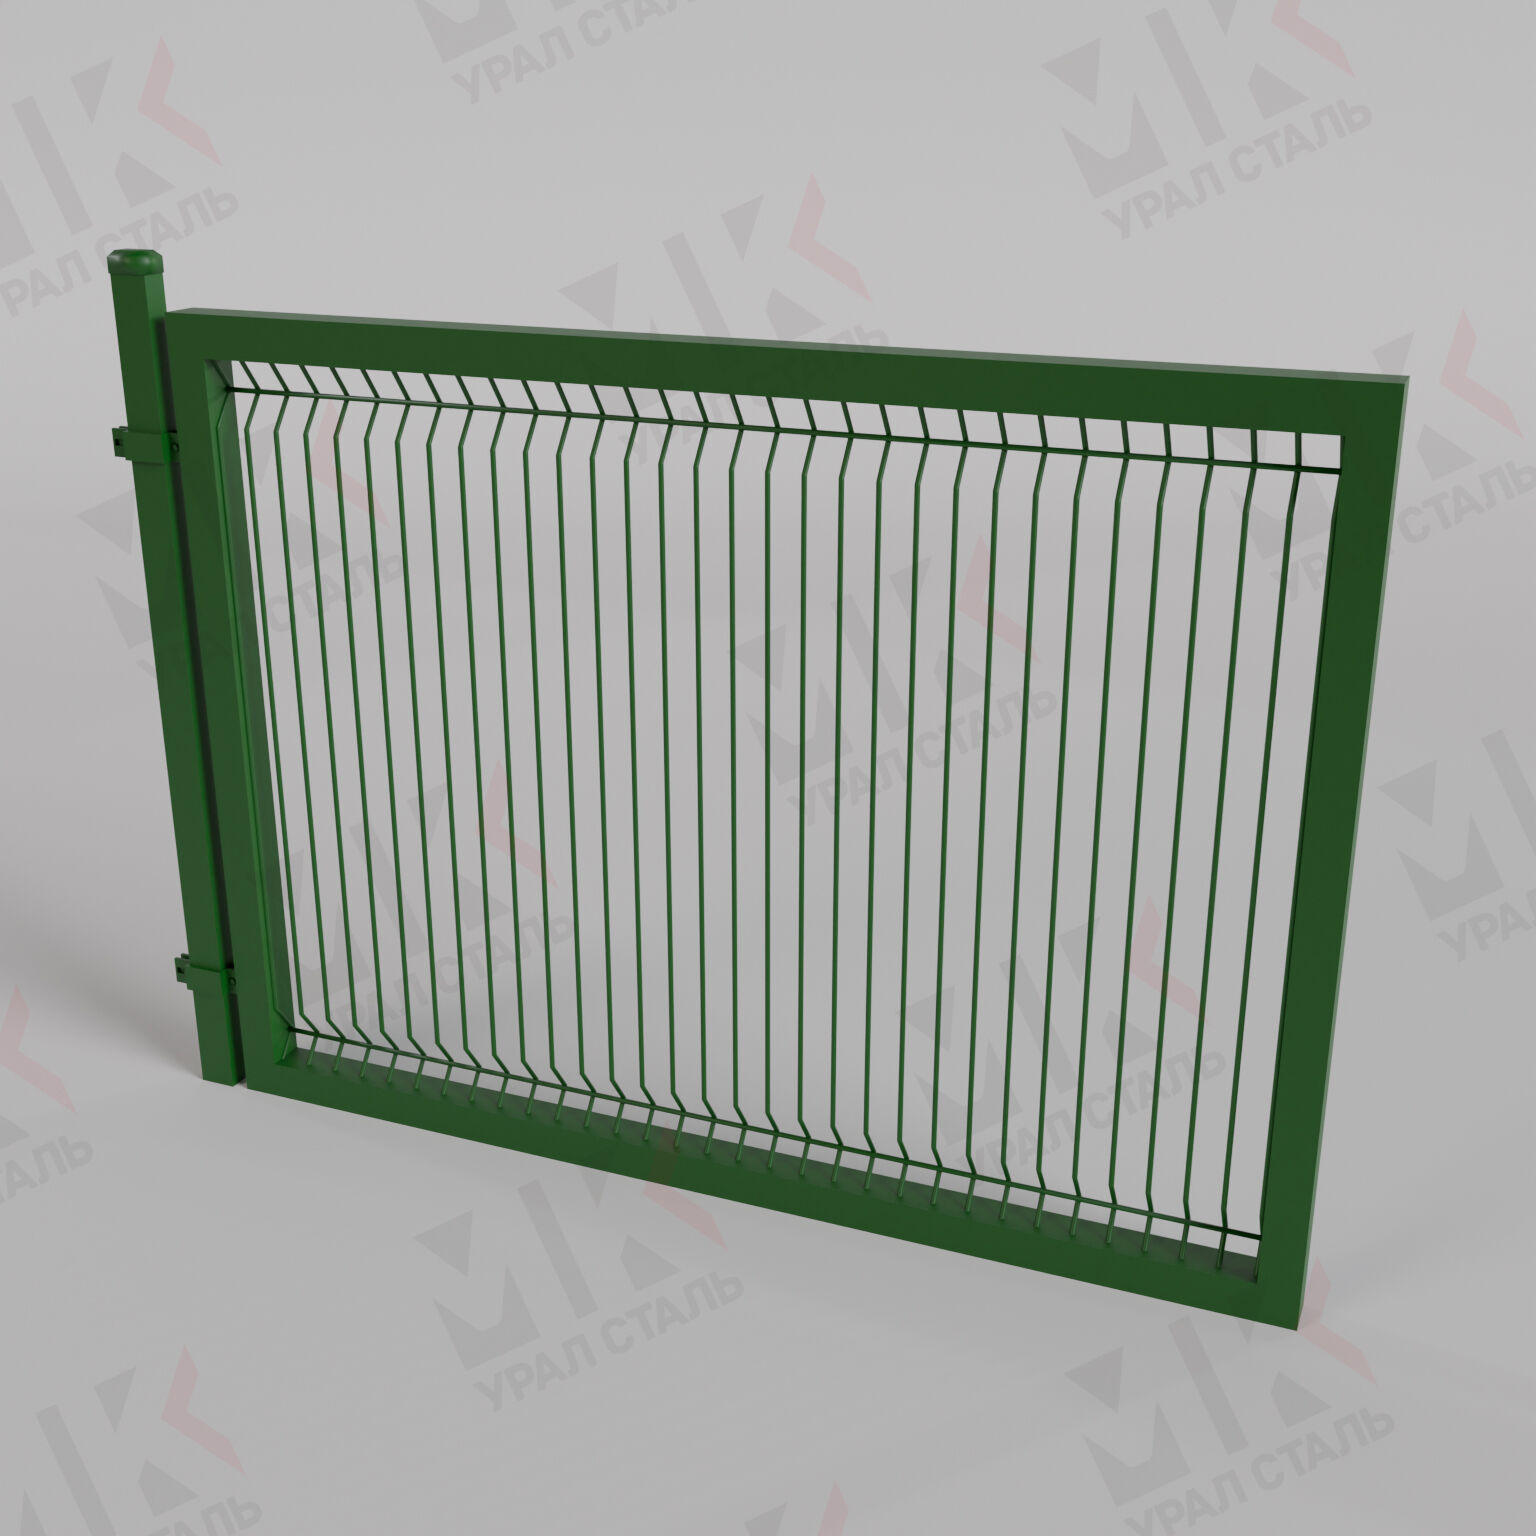 Ворота для 3D забора зеленые (RAL 6005) откатные 2000х3000 мм